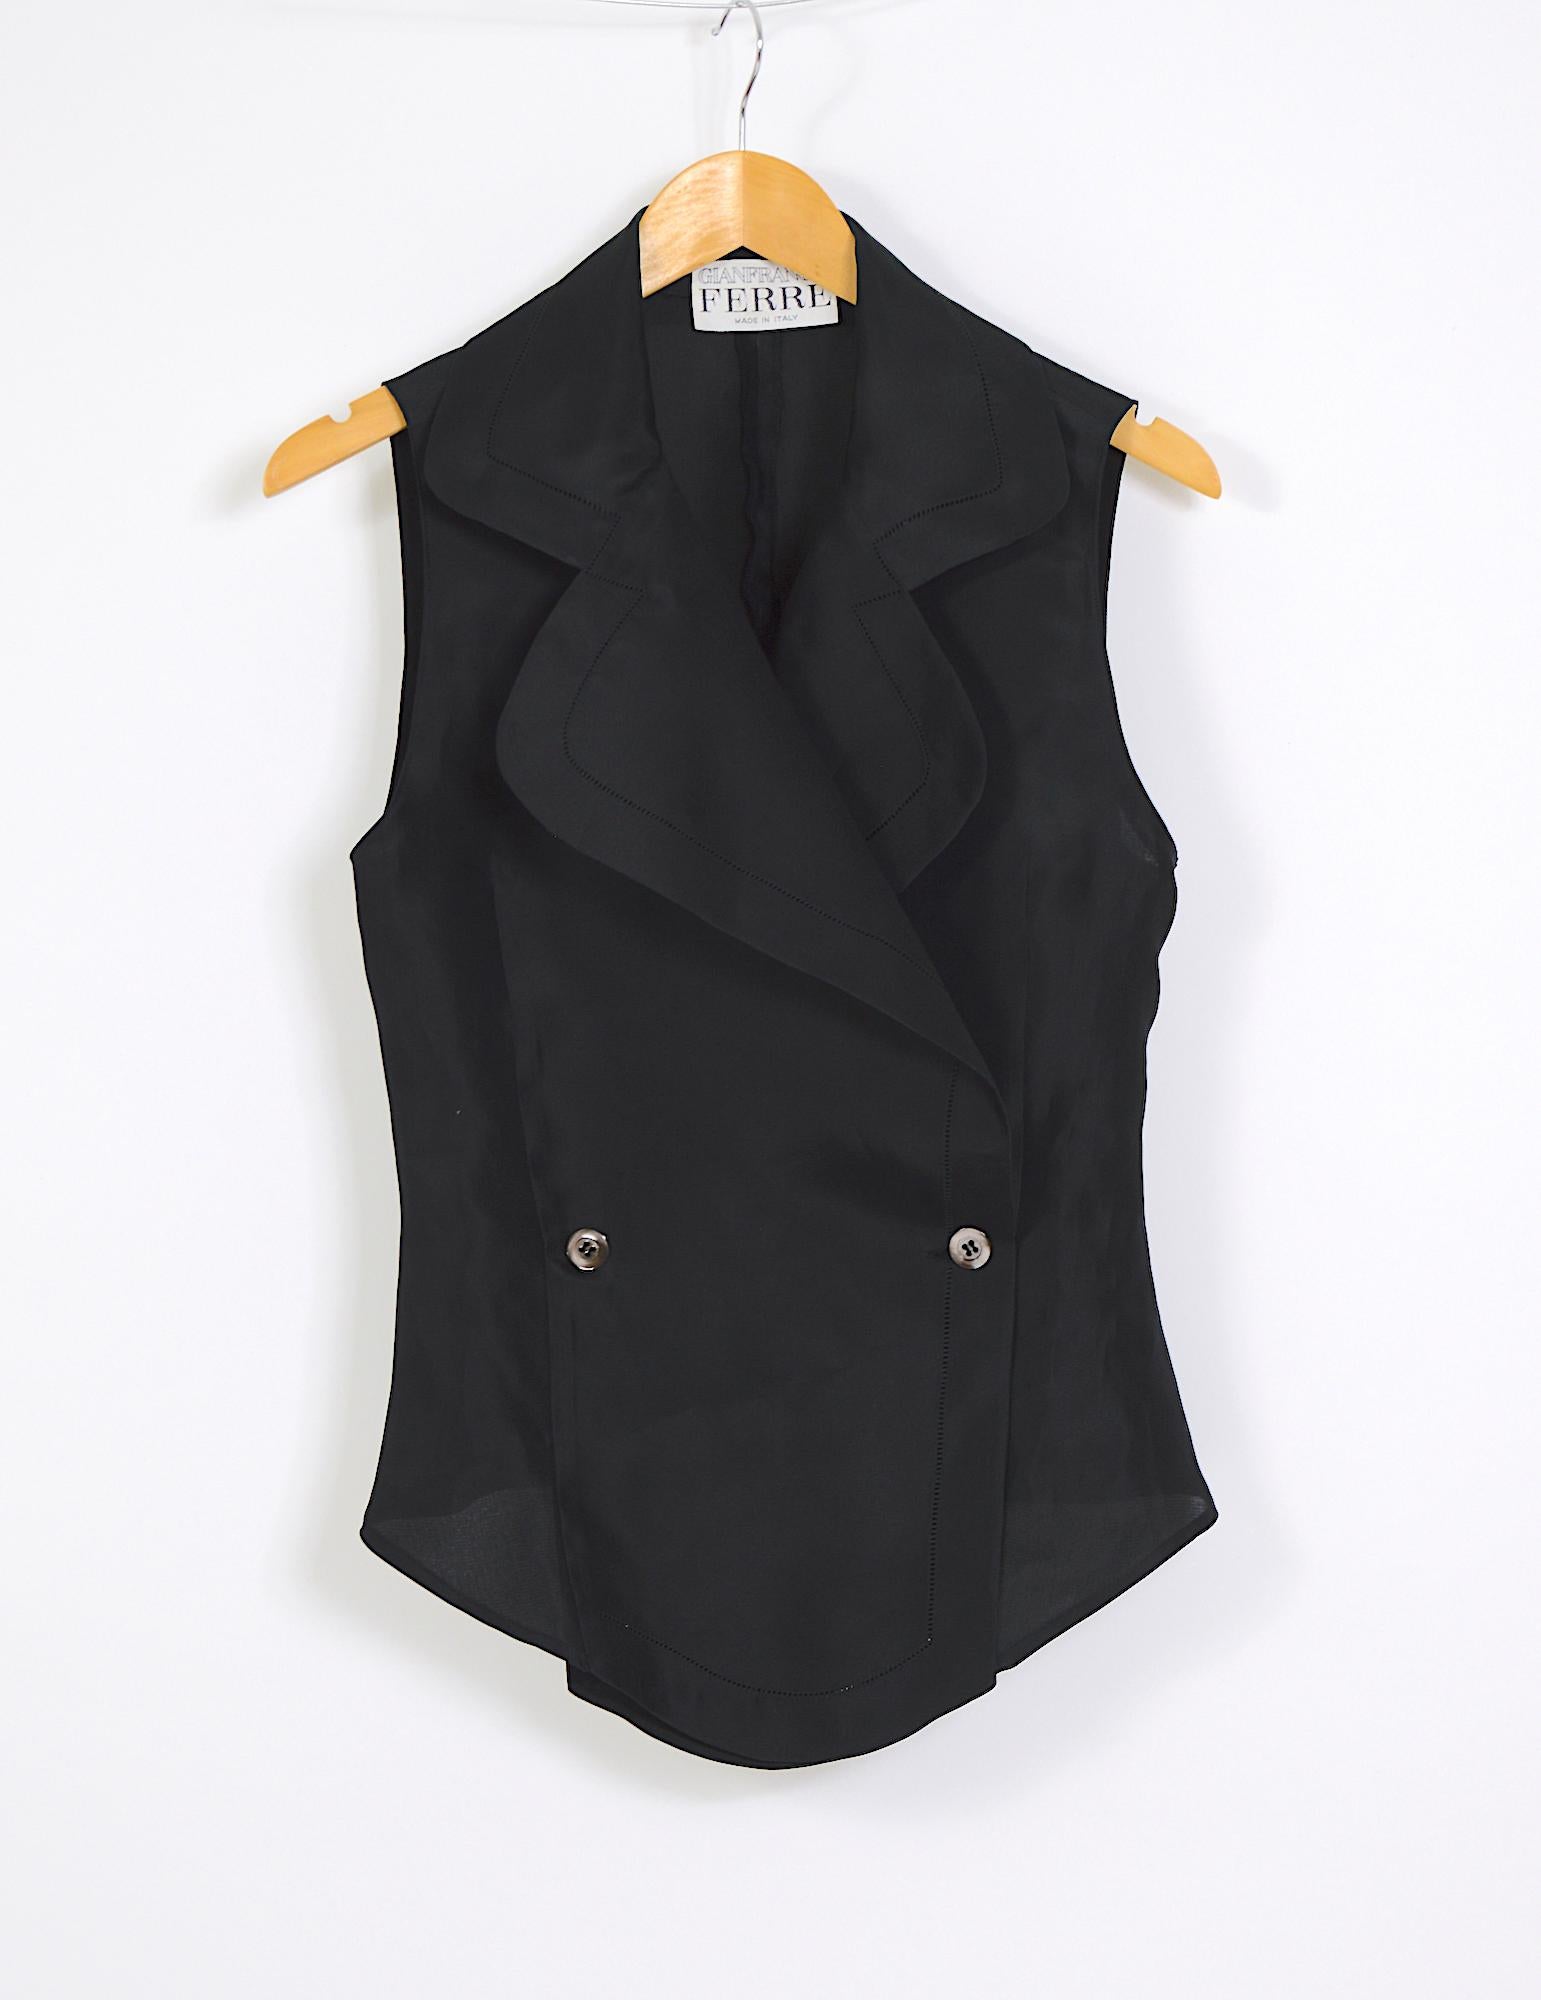 Women's Gianfranco Ferre vintage black silk organza vest